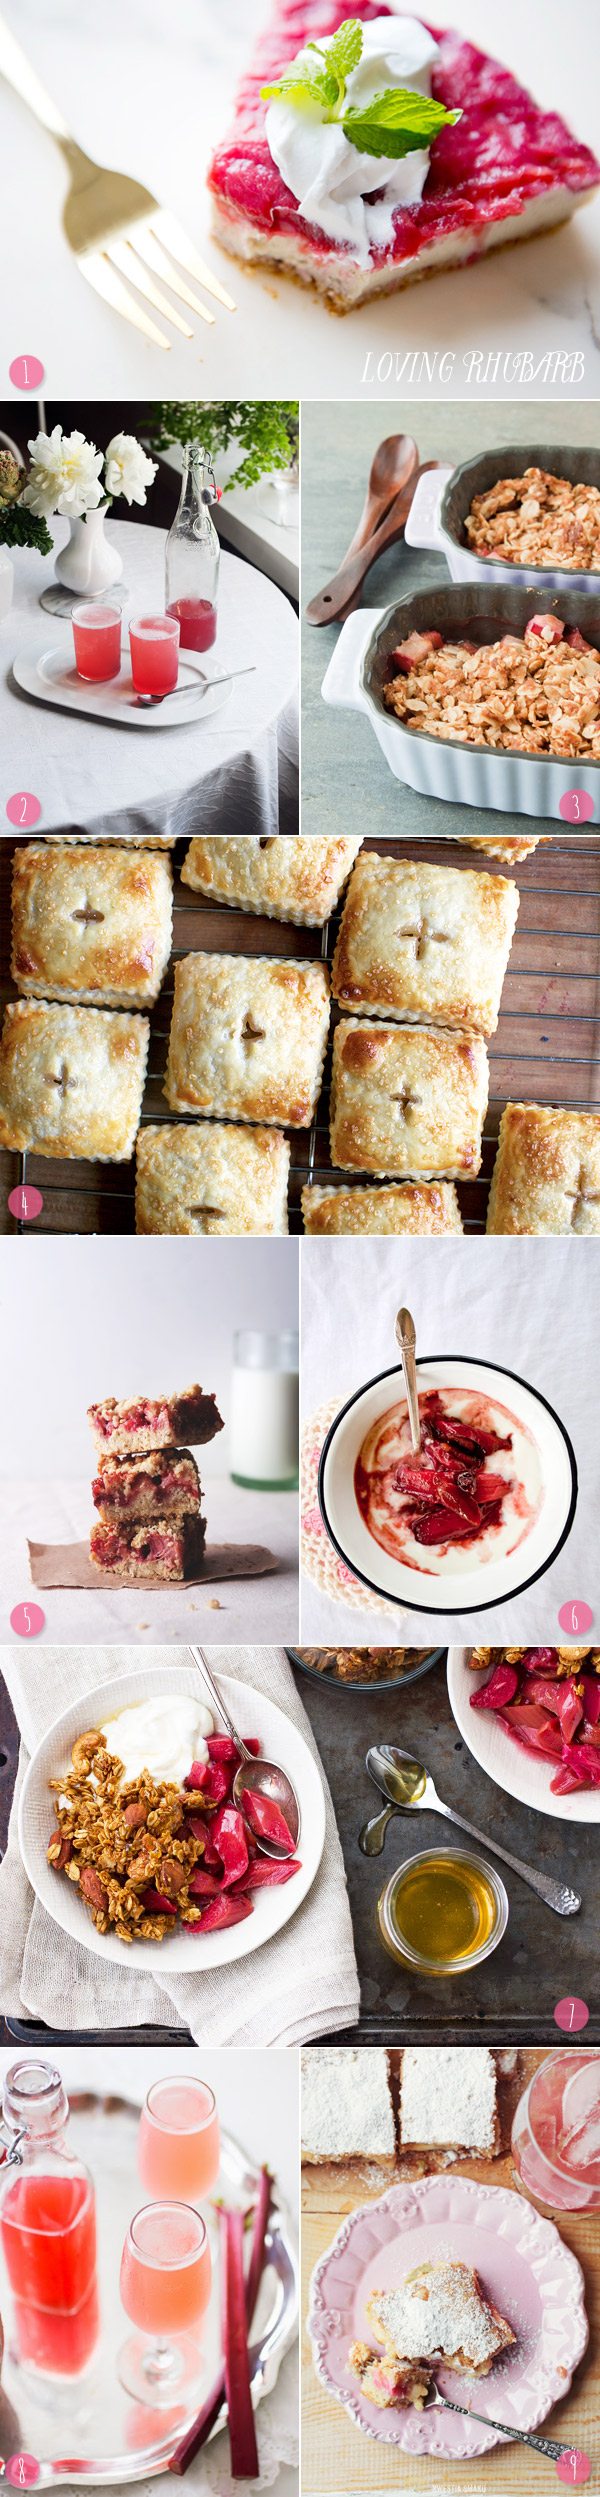 9 Rhubarb Dessert Recipes